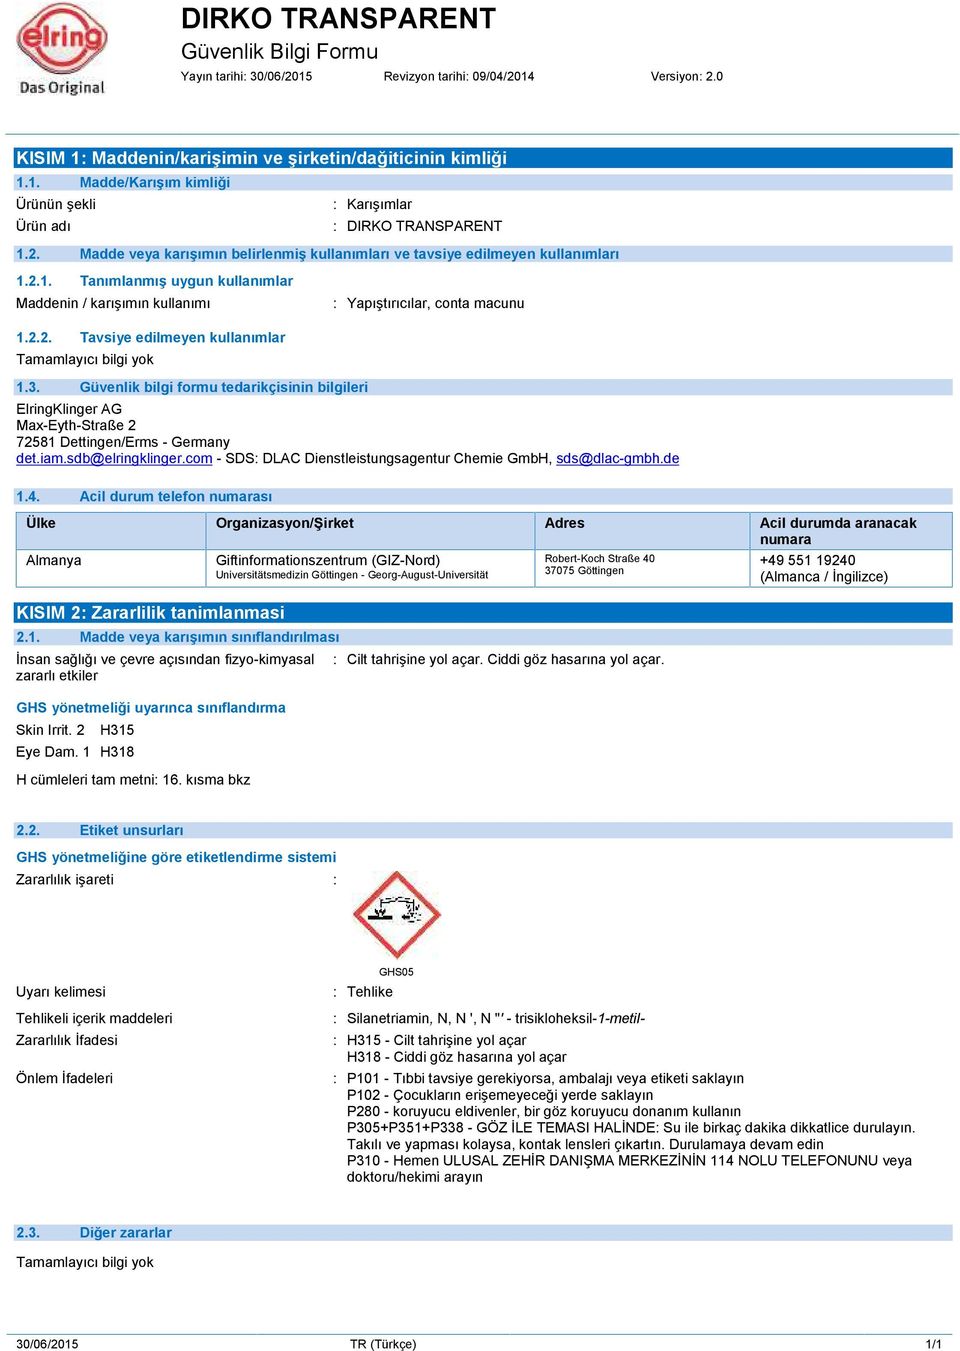 3. Güvenlik bilgi formu tedarikçisinin bilgileri ElringKlinger AG Max-Eyth-Straße 2 72581 Dettingen/Erms - Germany det.iam.sdb@elringklinger.